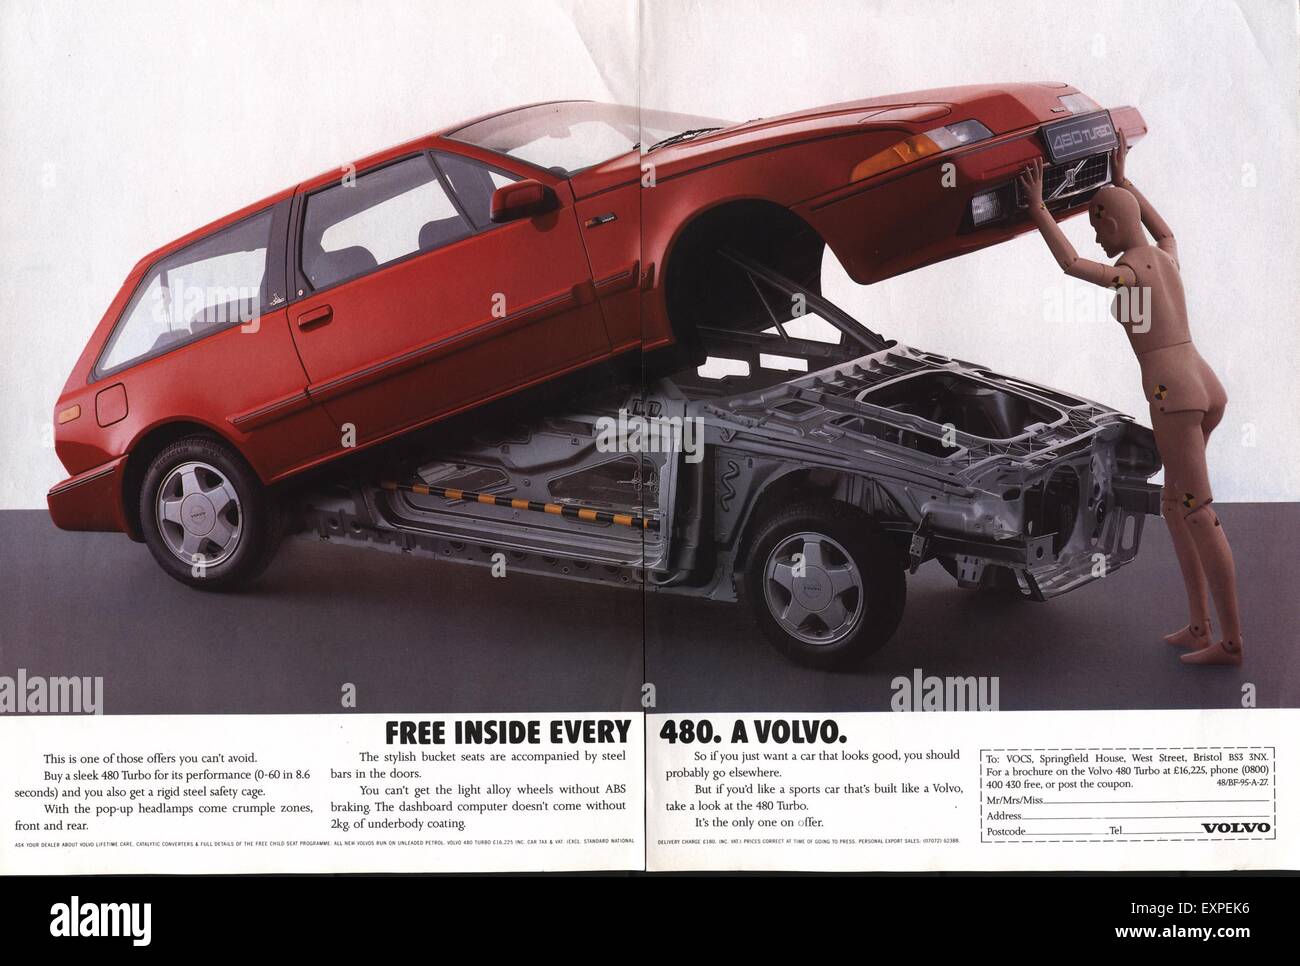 1990s UK Volvo Magazine Advert Stock Photo